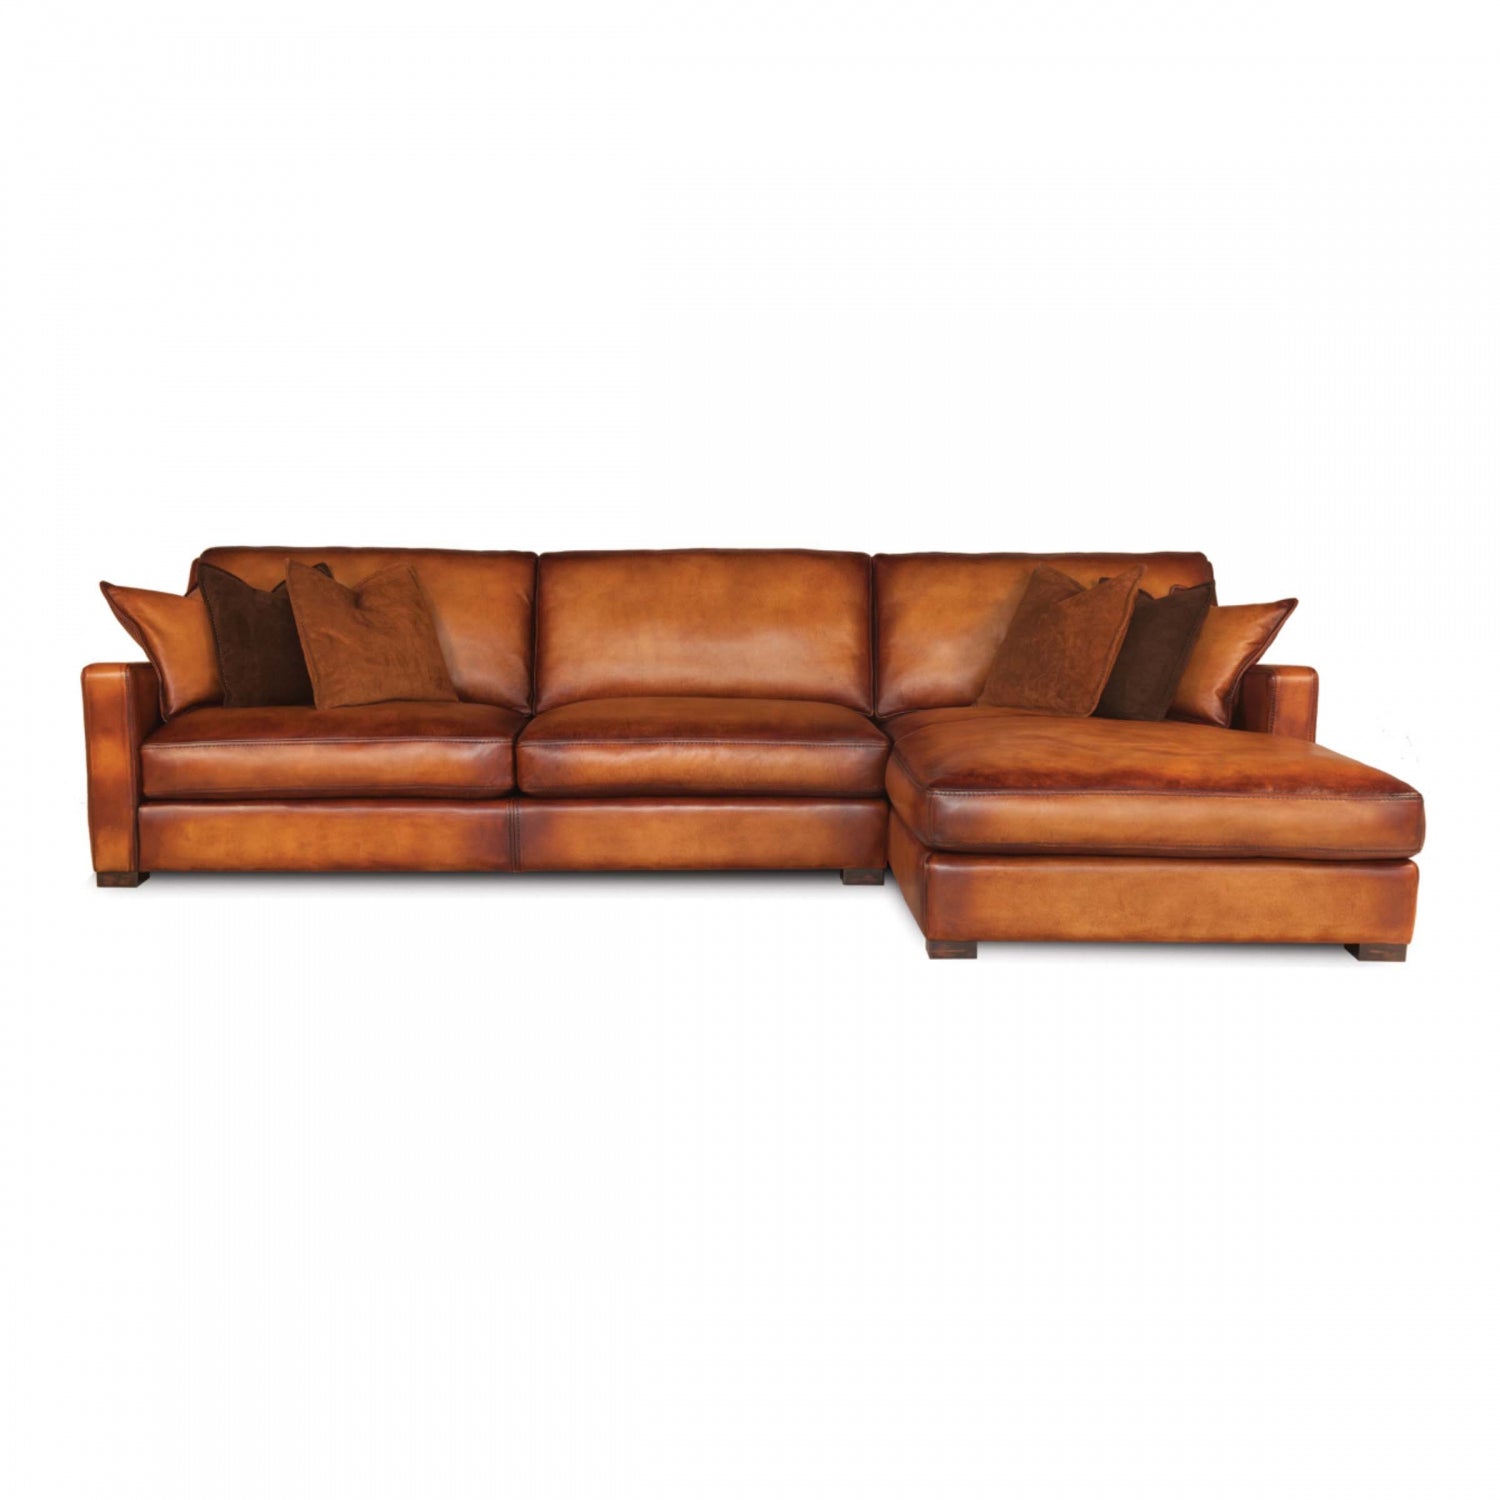 Eleanor Rigby Veracruz Sectional (Sofa + Chaise)